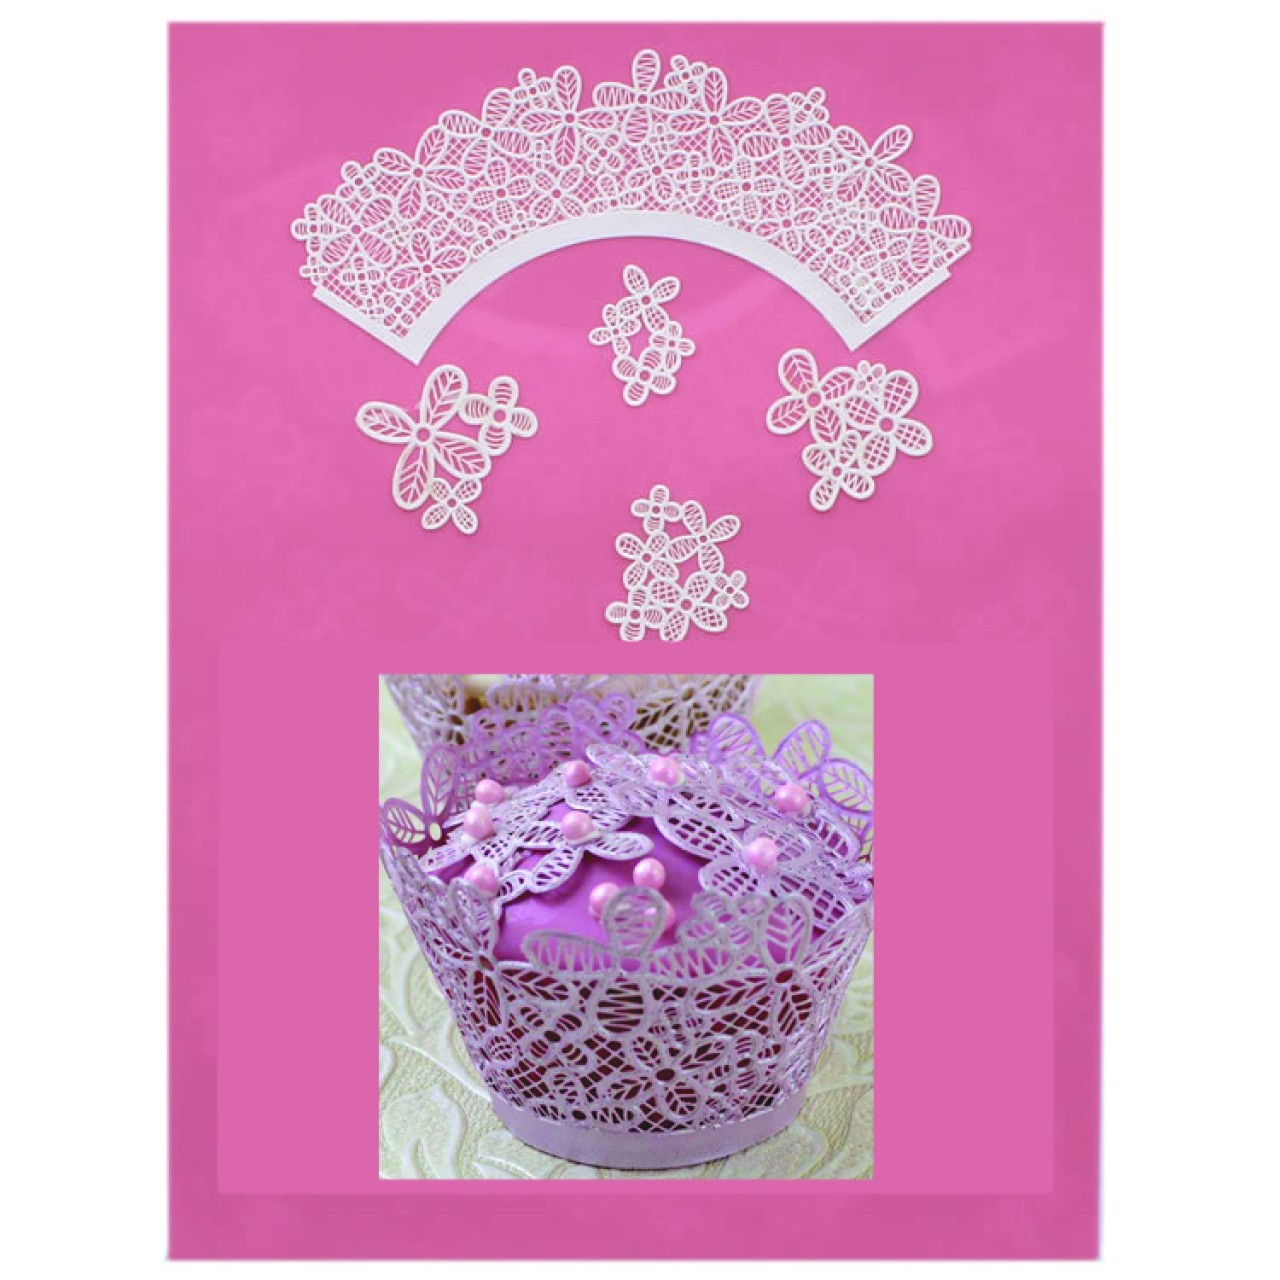 Cake Lace essbare Spitze ''Cupcakes Wrapper" 40 x 30 cm